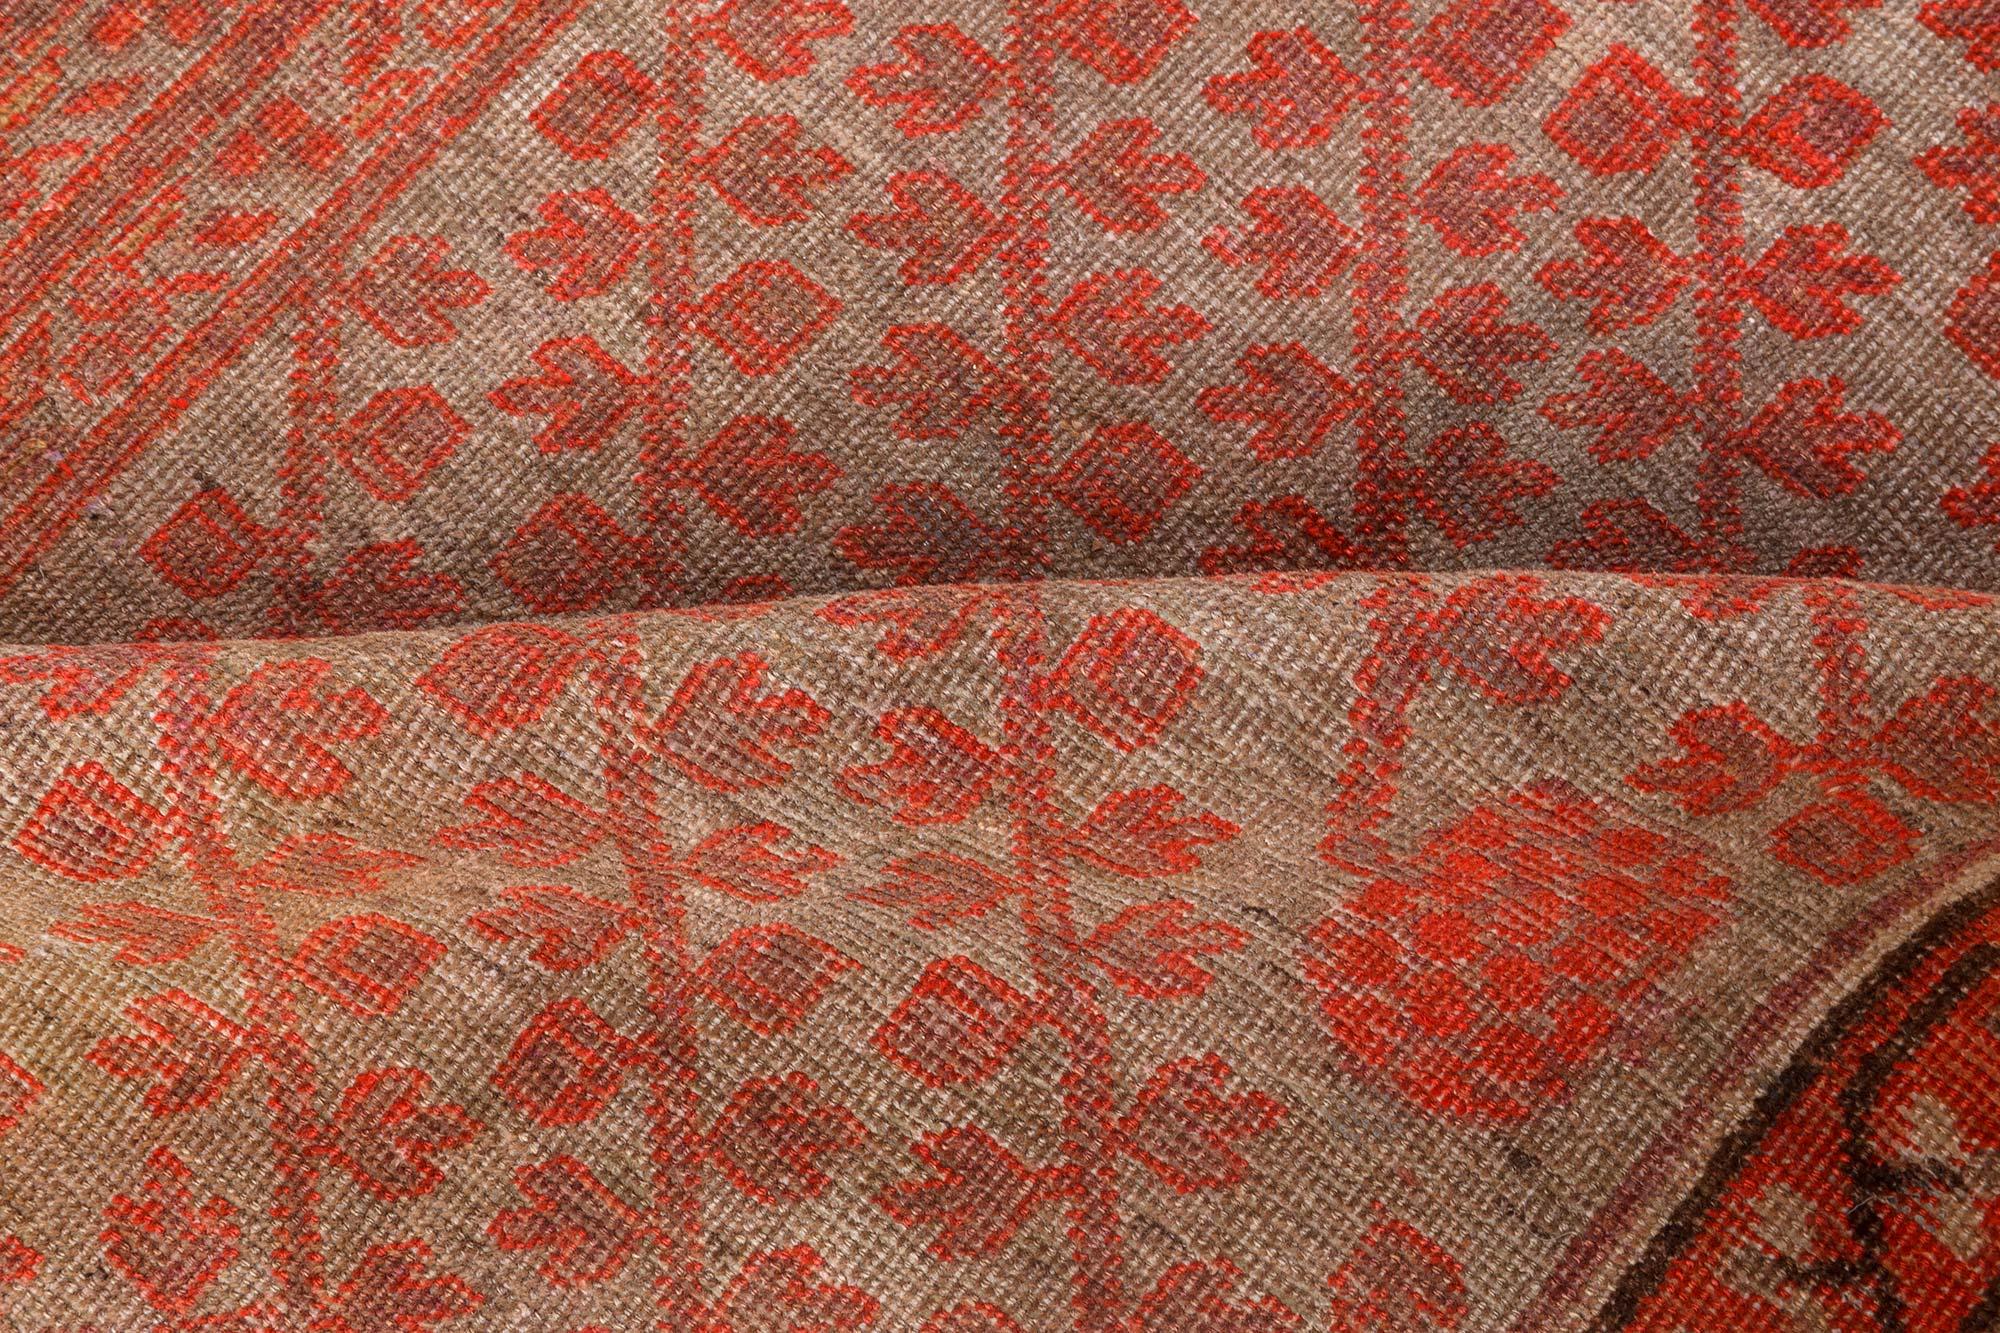 Midcentury Samarkand handmade wool rug
Size: 6'3